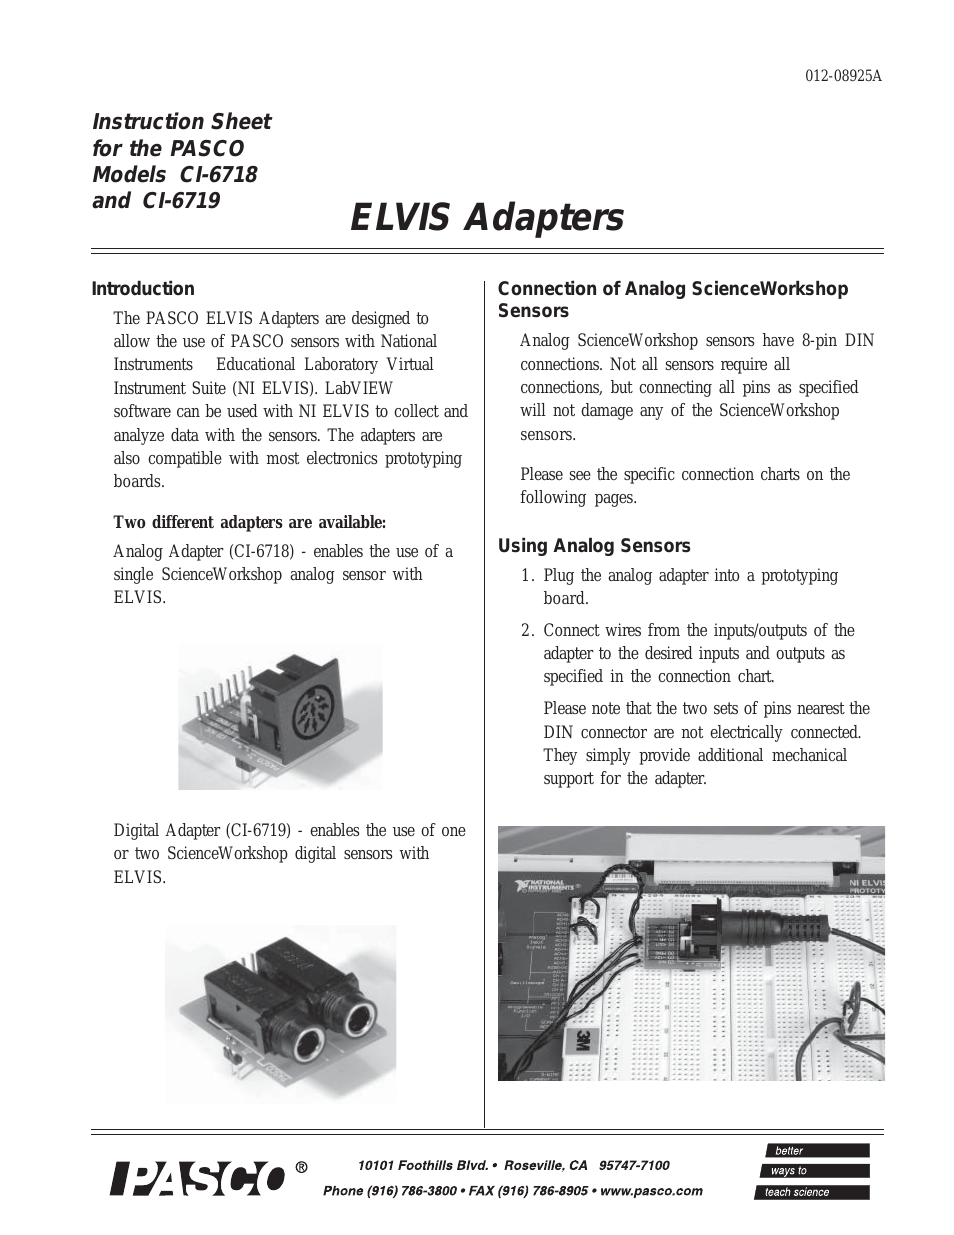 CI-6719 ELVIS Adapters